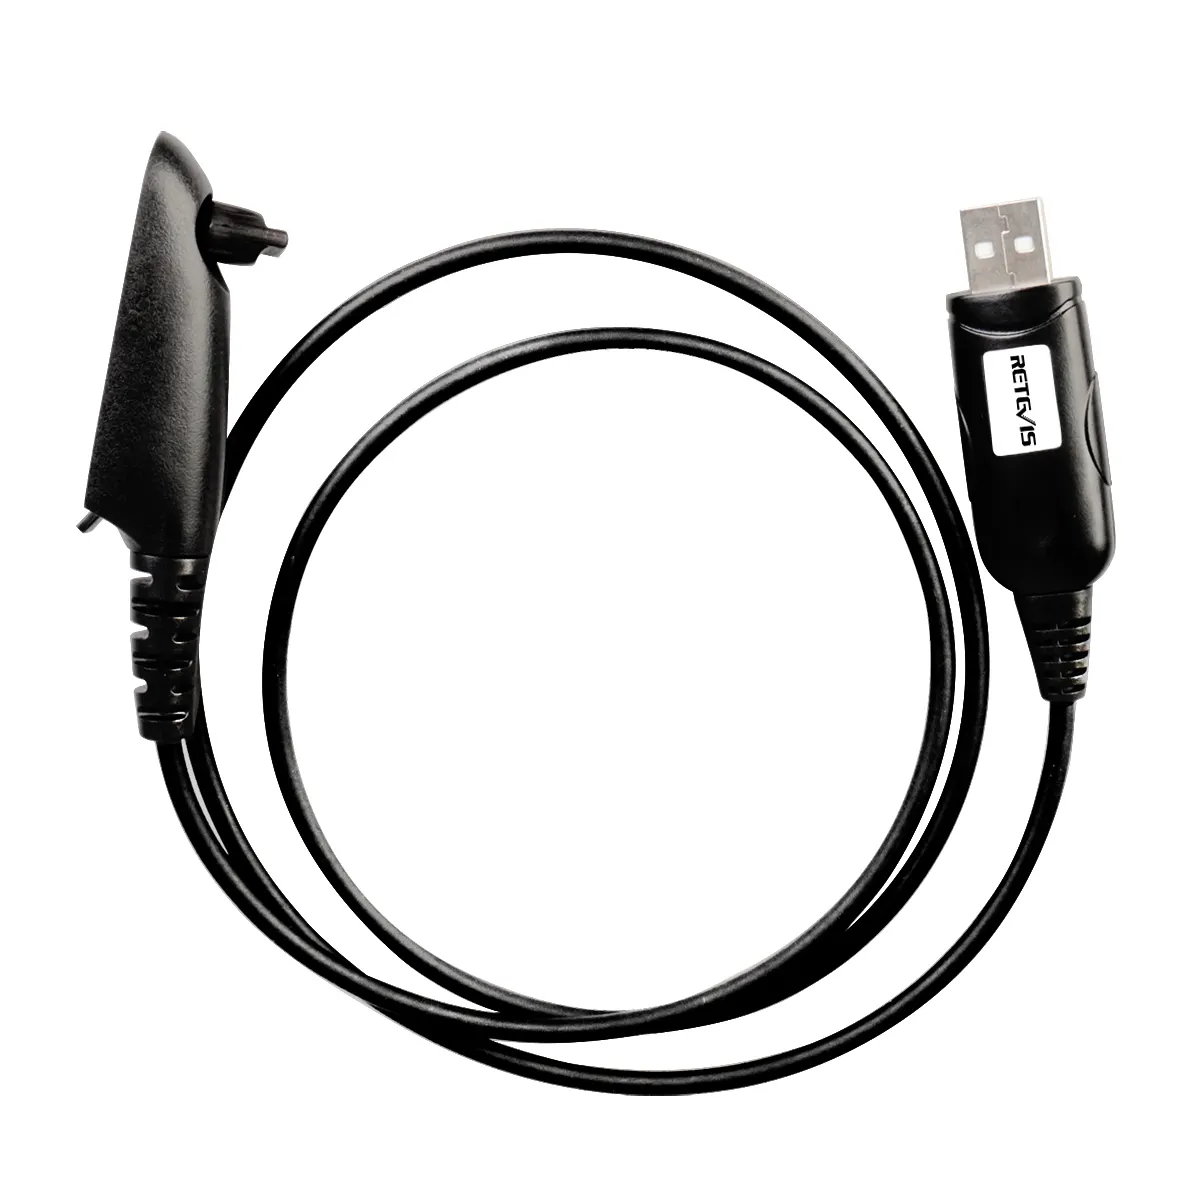 Retevis PC328 USB Programming Cable Data Cable for Motorola GP328 M110 HT1250 HT750 GP329 GP339 MCX600 Radio Walkie Talkies